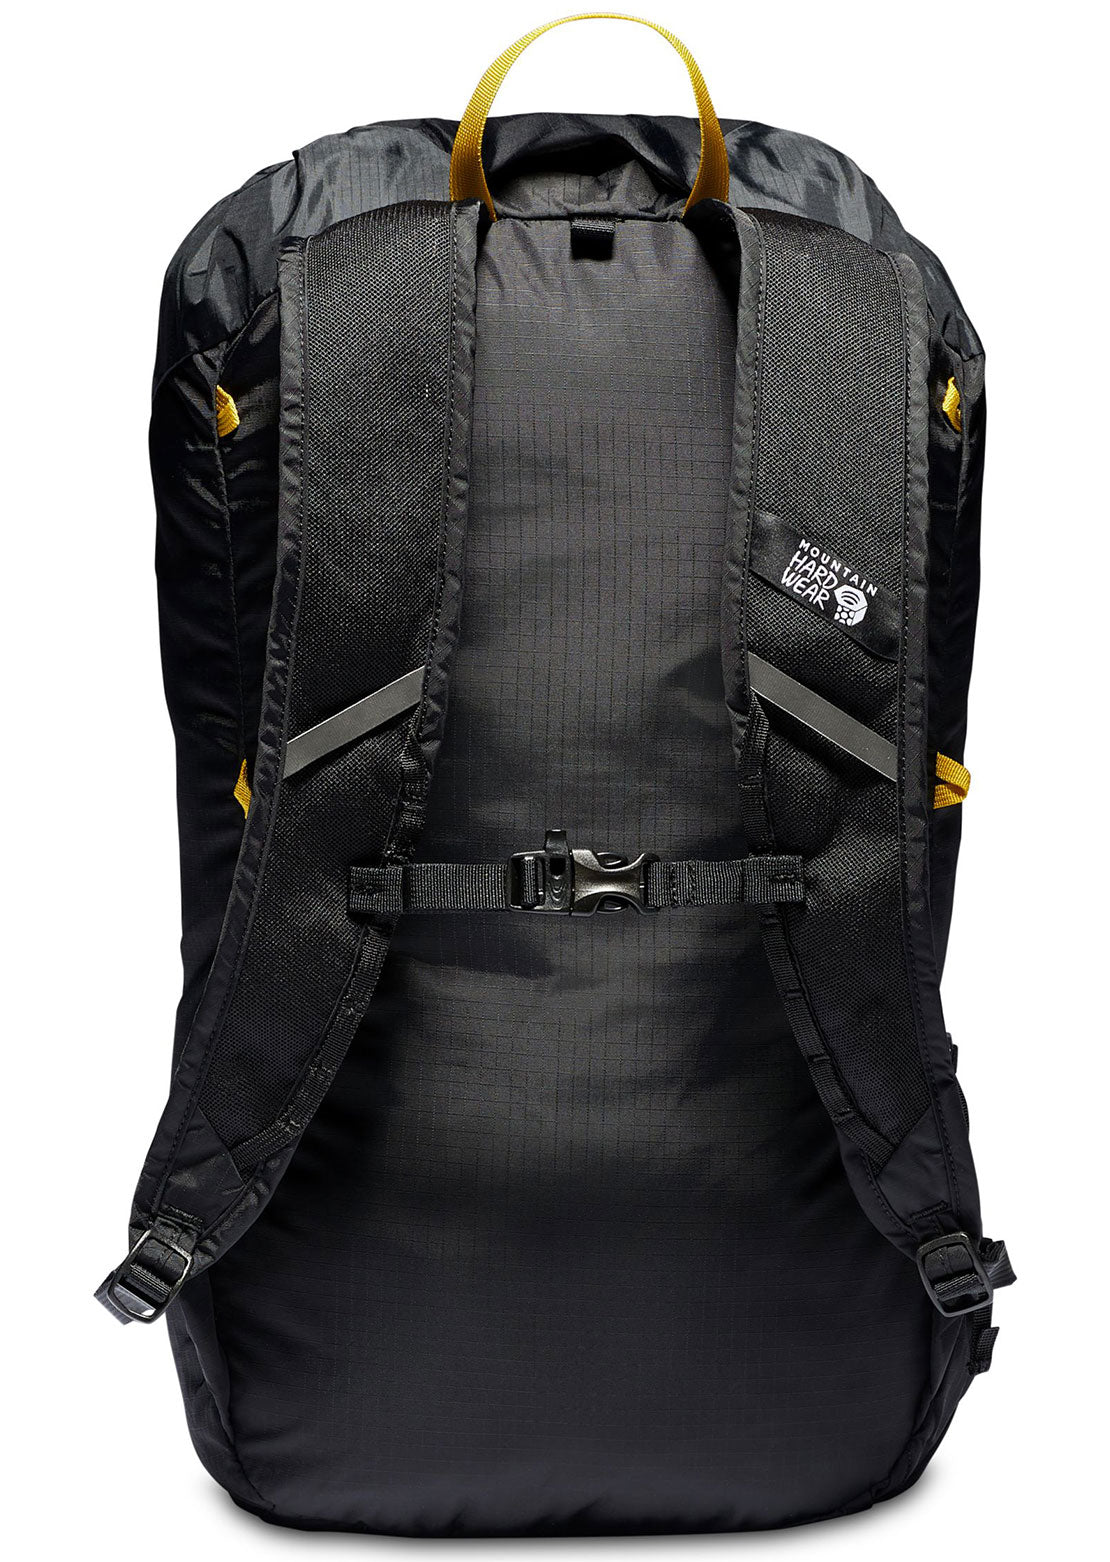 Mountain Hardwear UL 20 Backpack Black